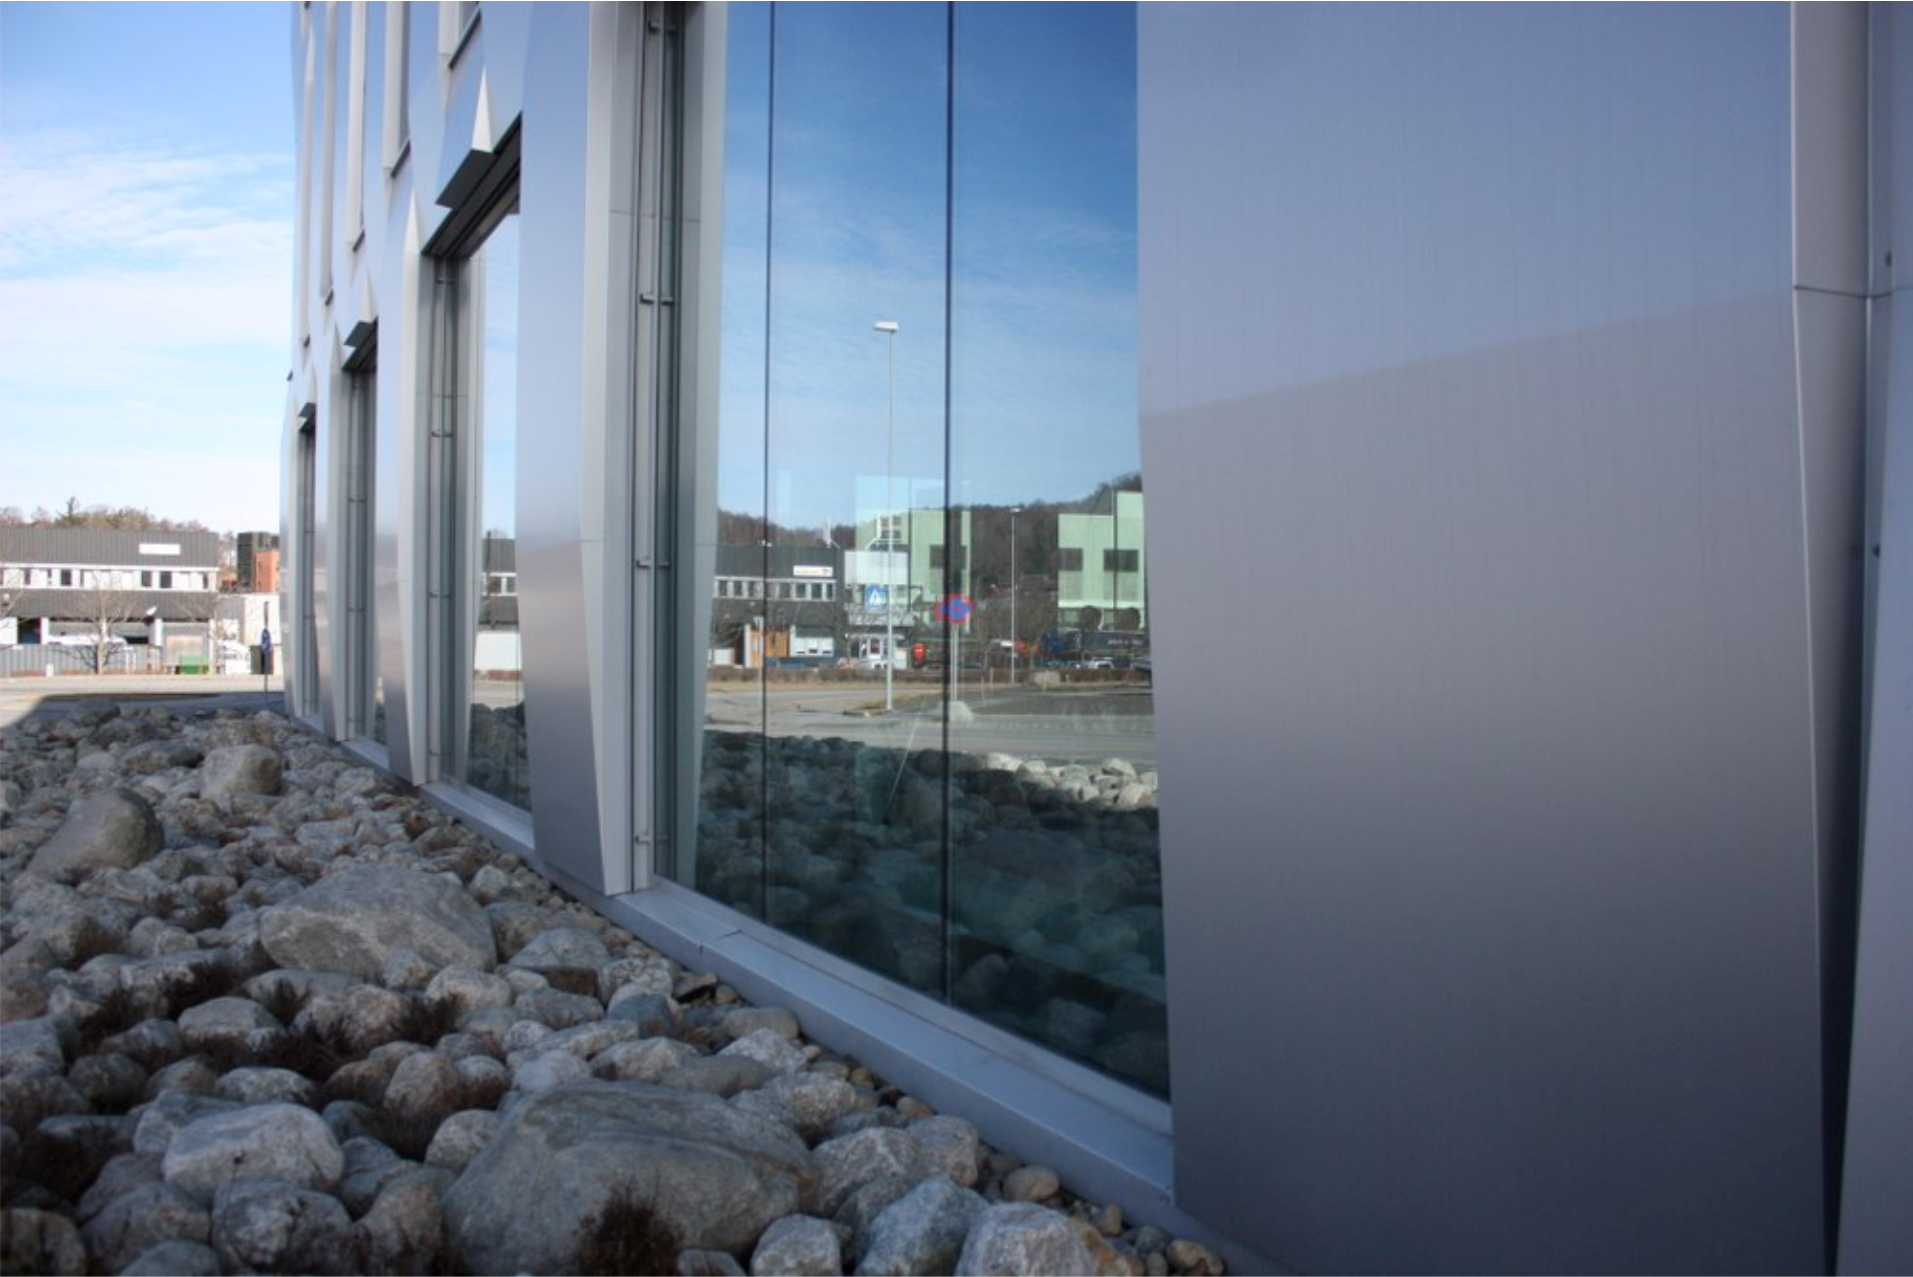 Ventilated facades - Aluminum Composite Panels and HPL Panels - www.serviceplast.com